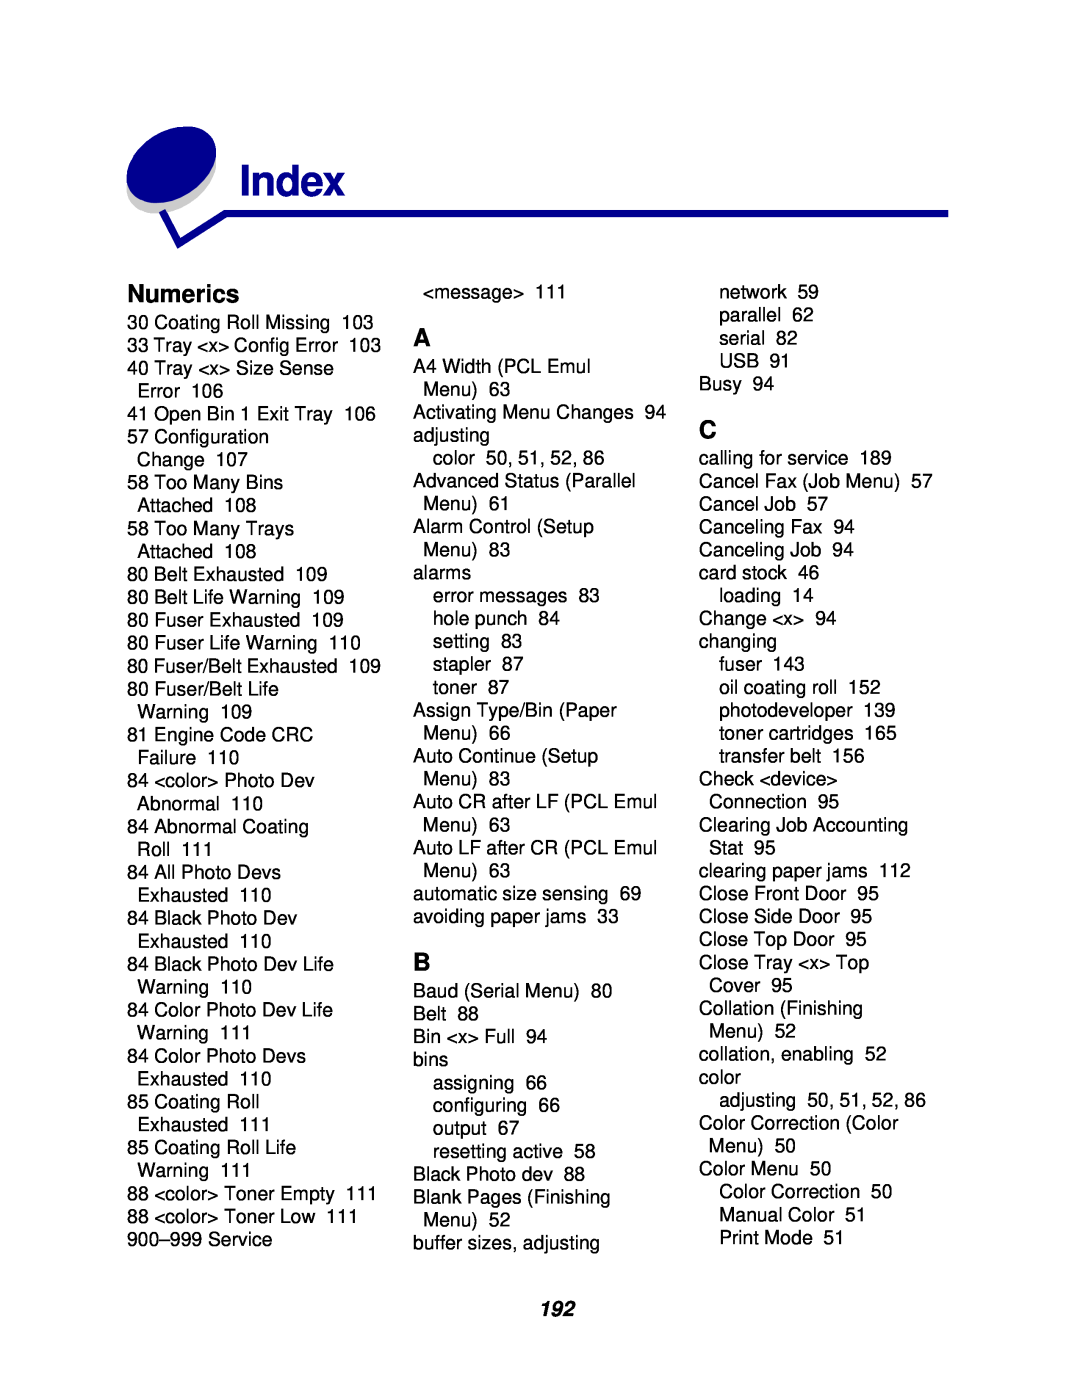 Lexmark 912 manual Index, Numerics 